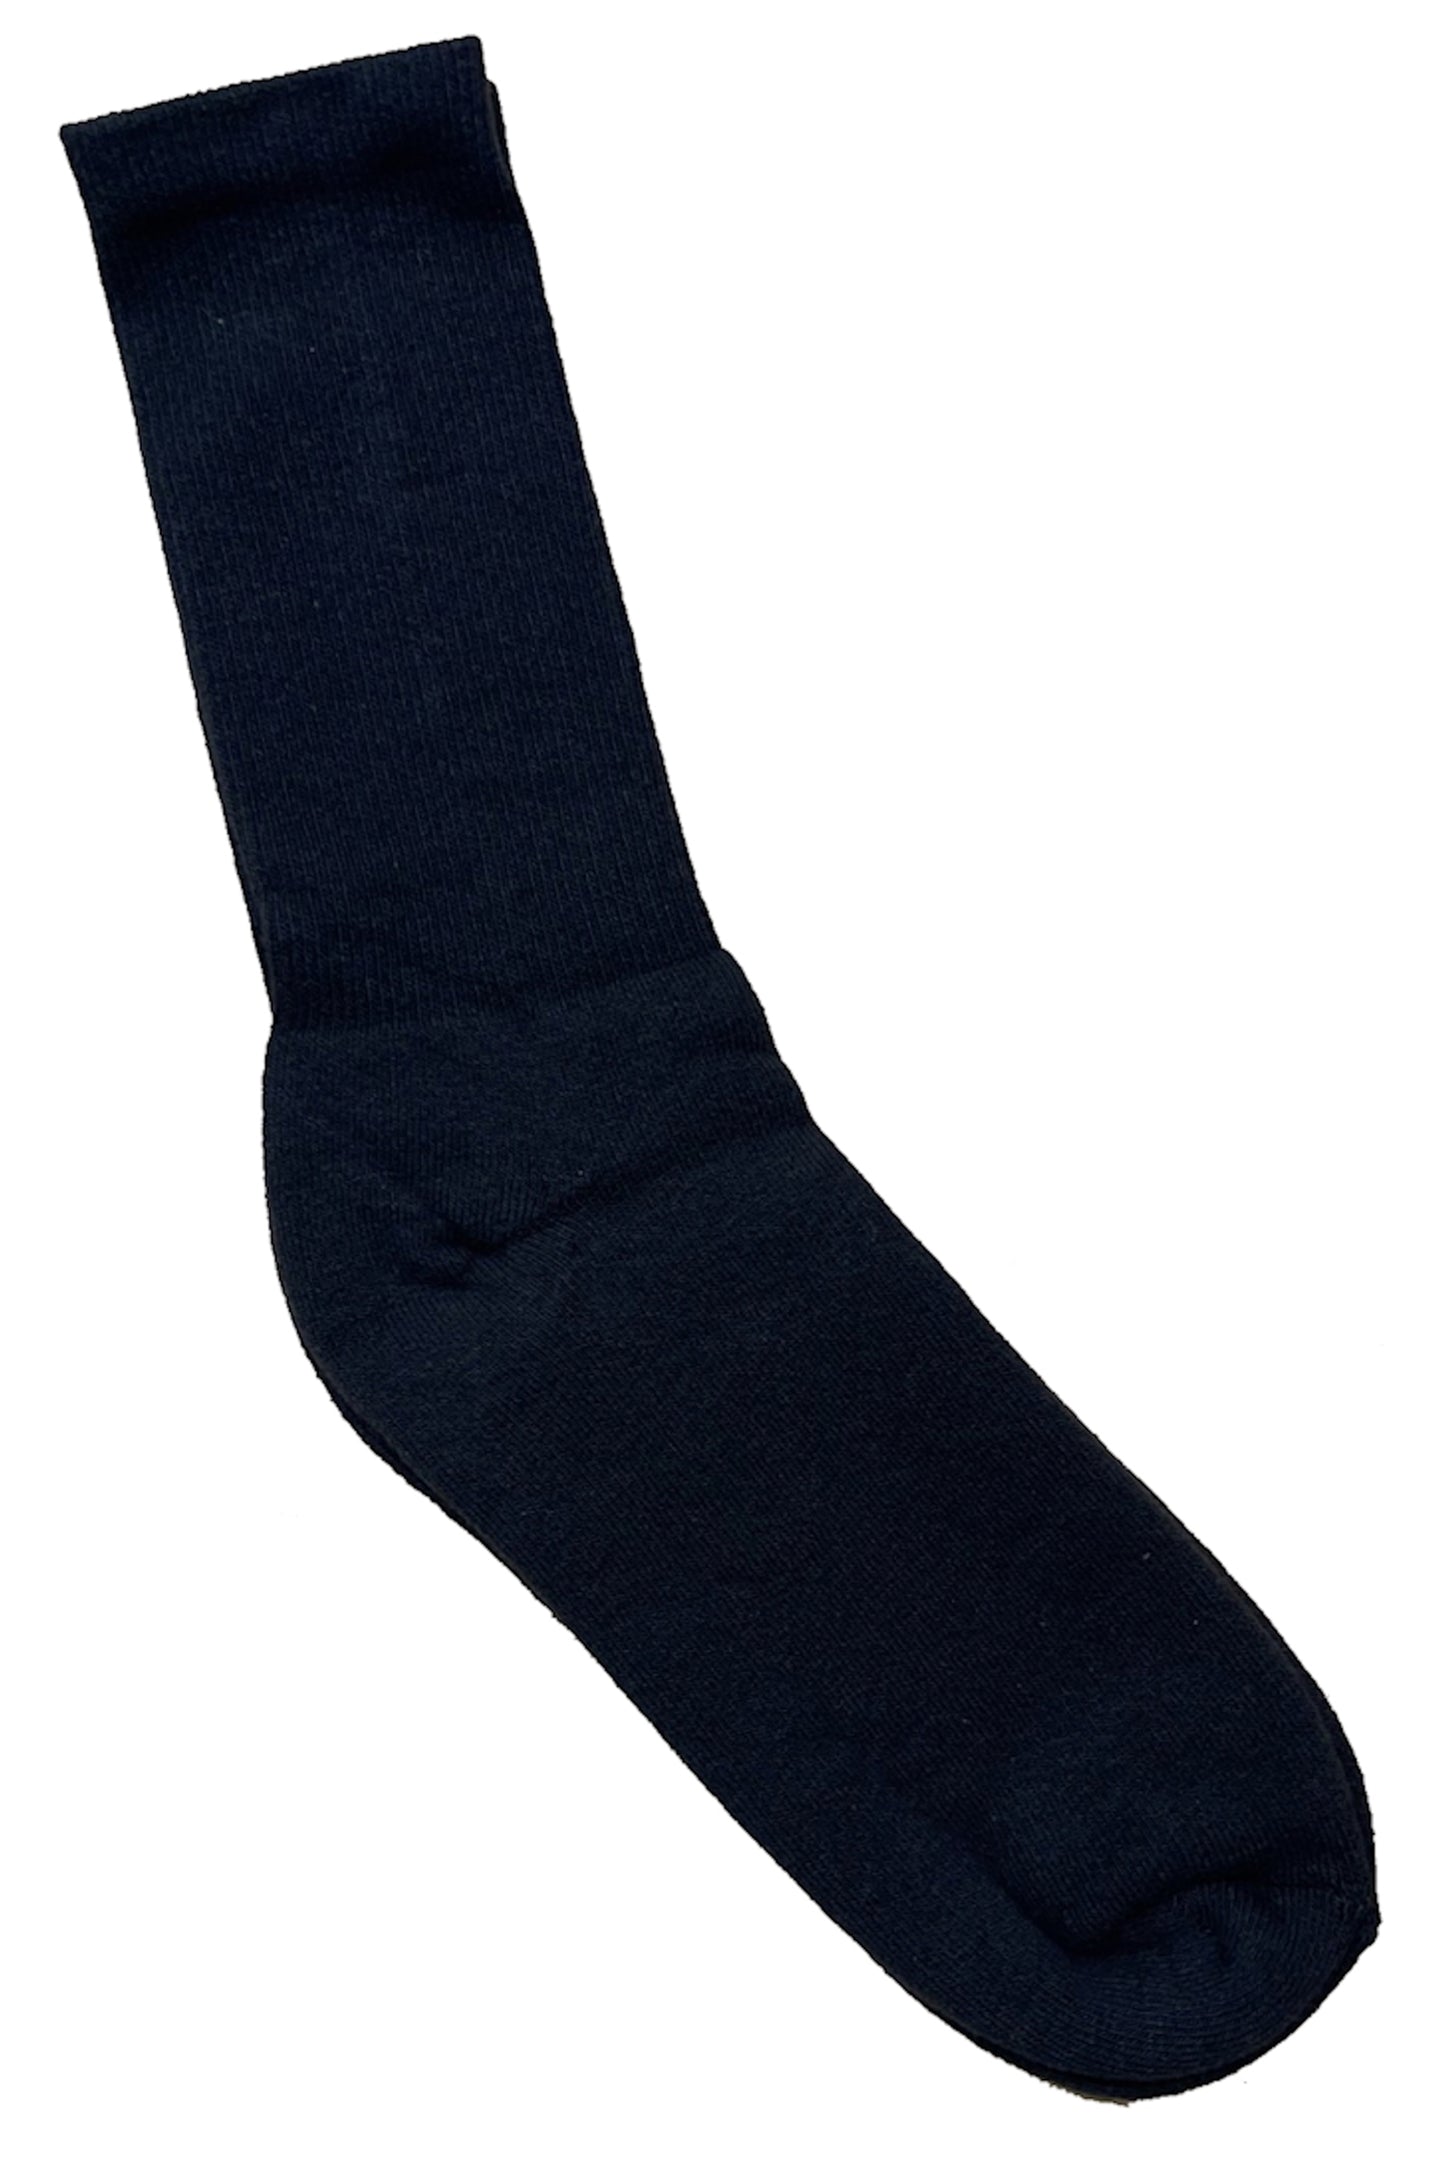 Cushees Comfort™ Crew socks, Double Thick